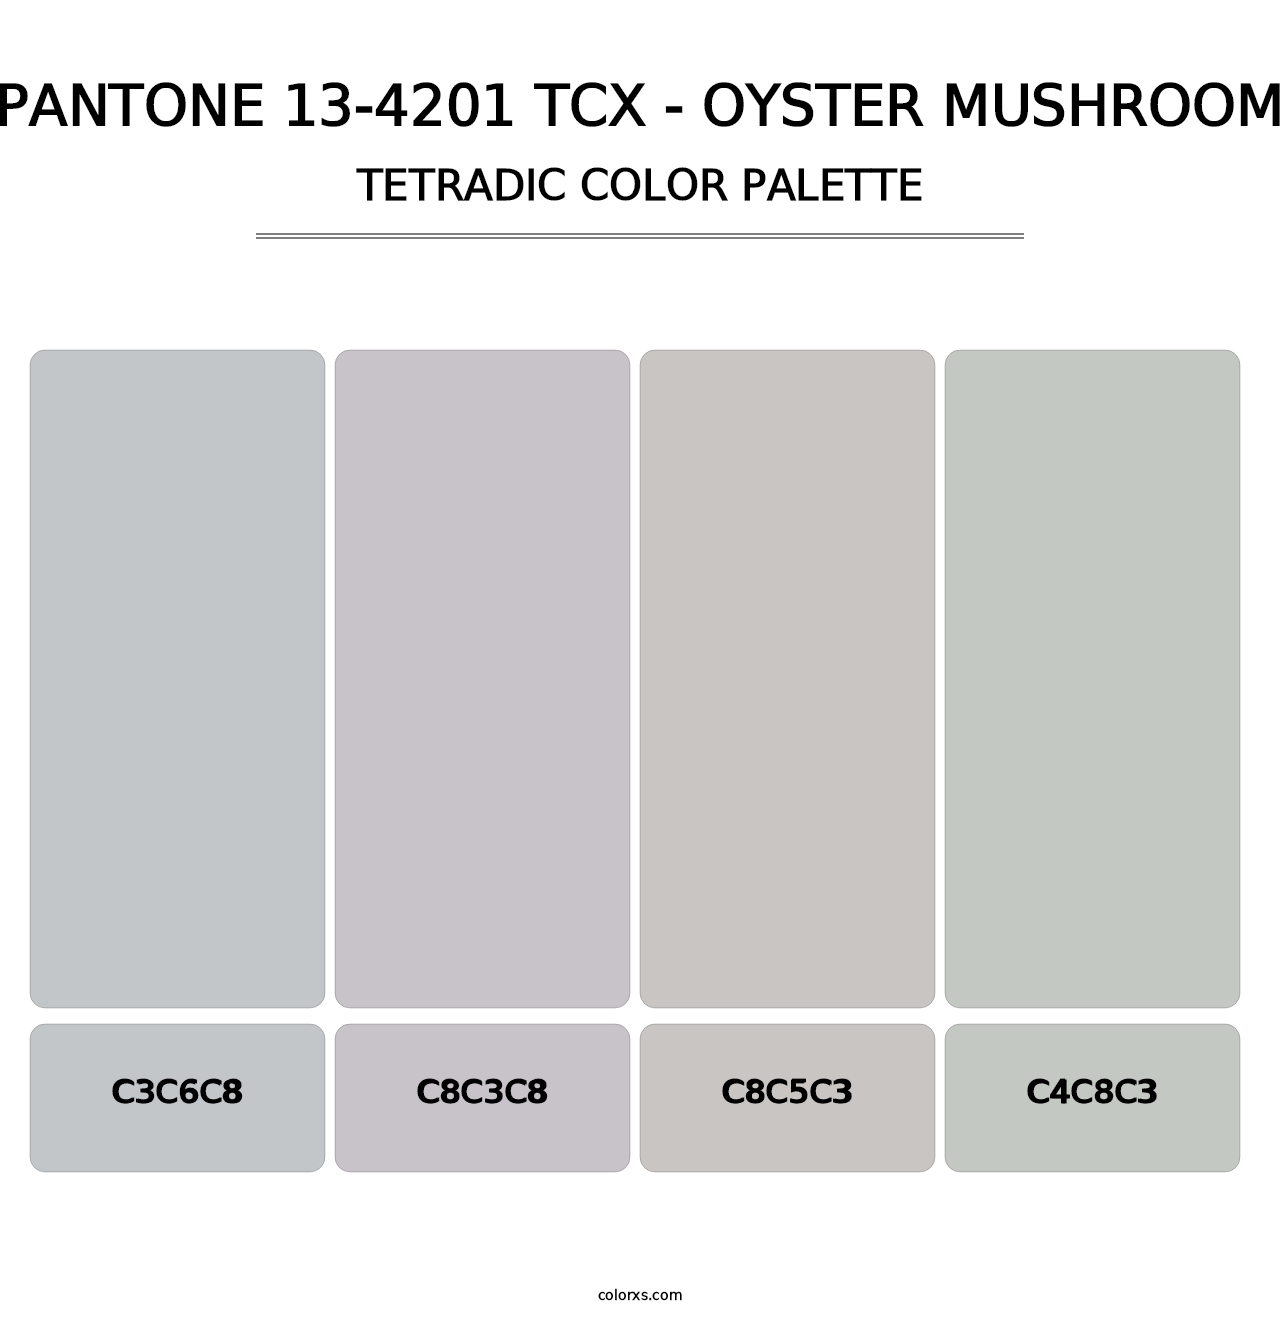 PANTONE 13-4201 TCX - Oyster Mushroom - Tetradic Color Palette